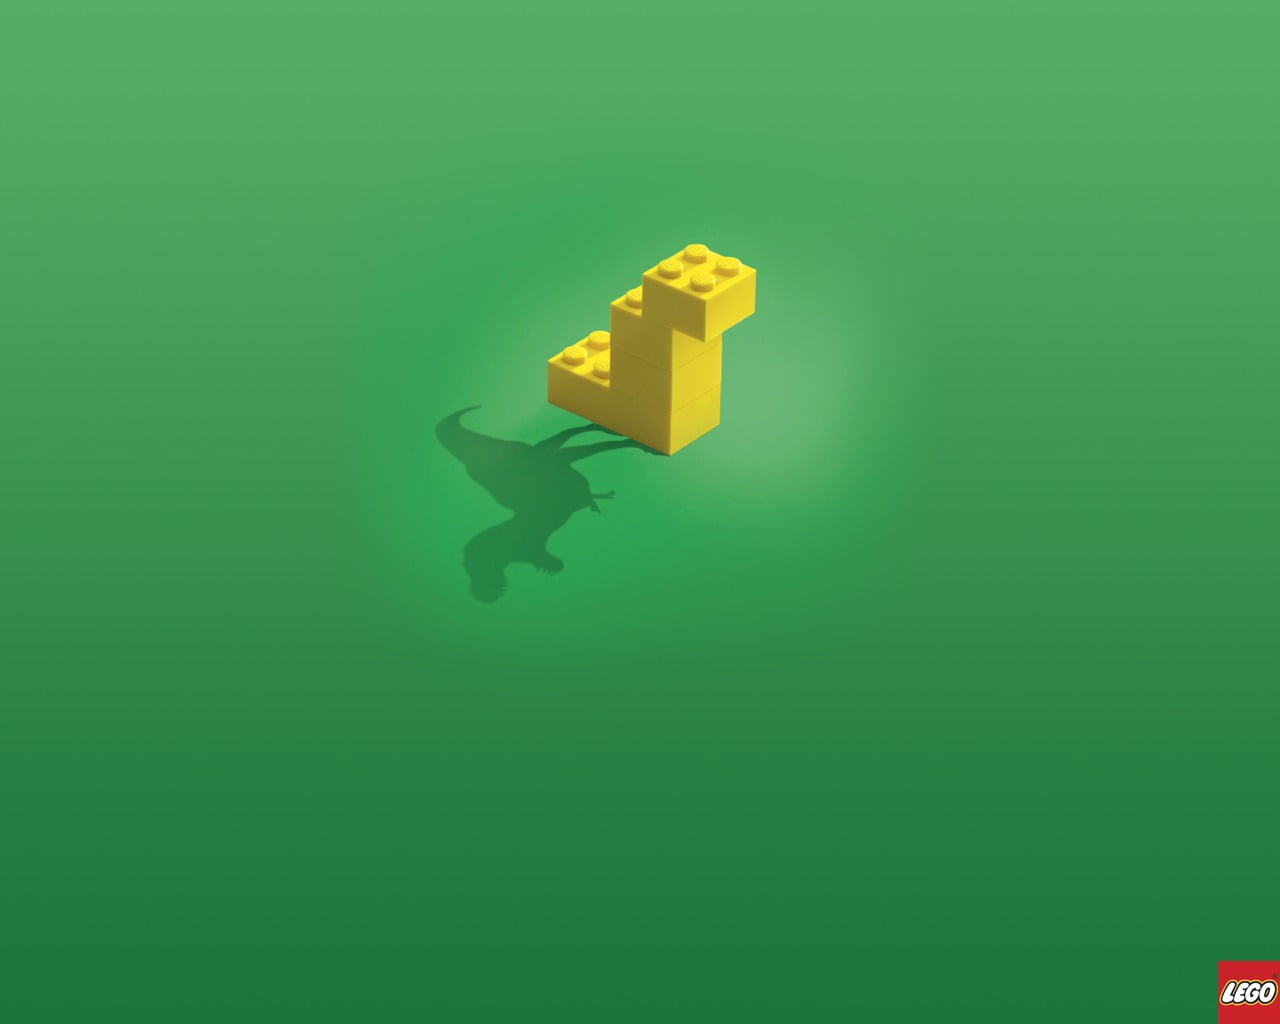 yellow LEGO brick toy, green background, dinosaurs, imagination